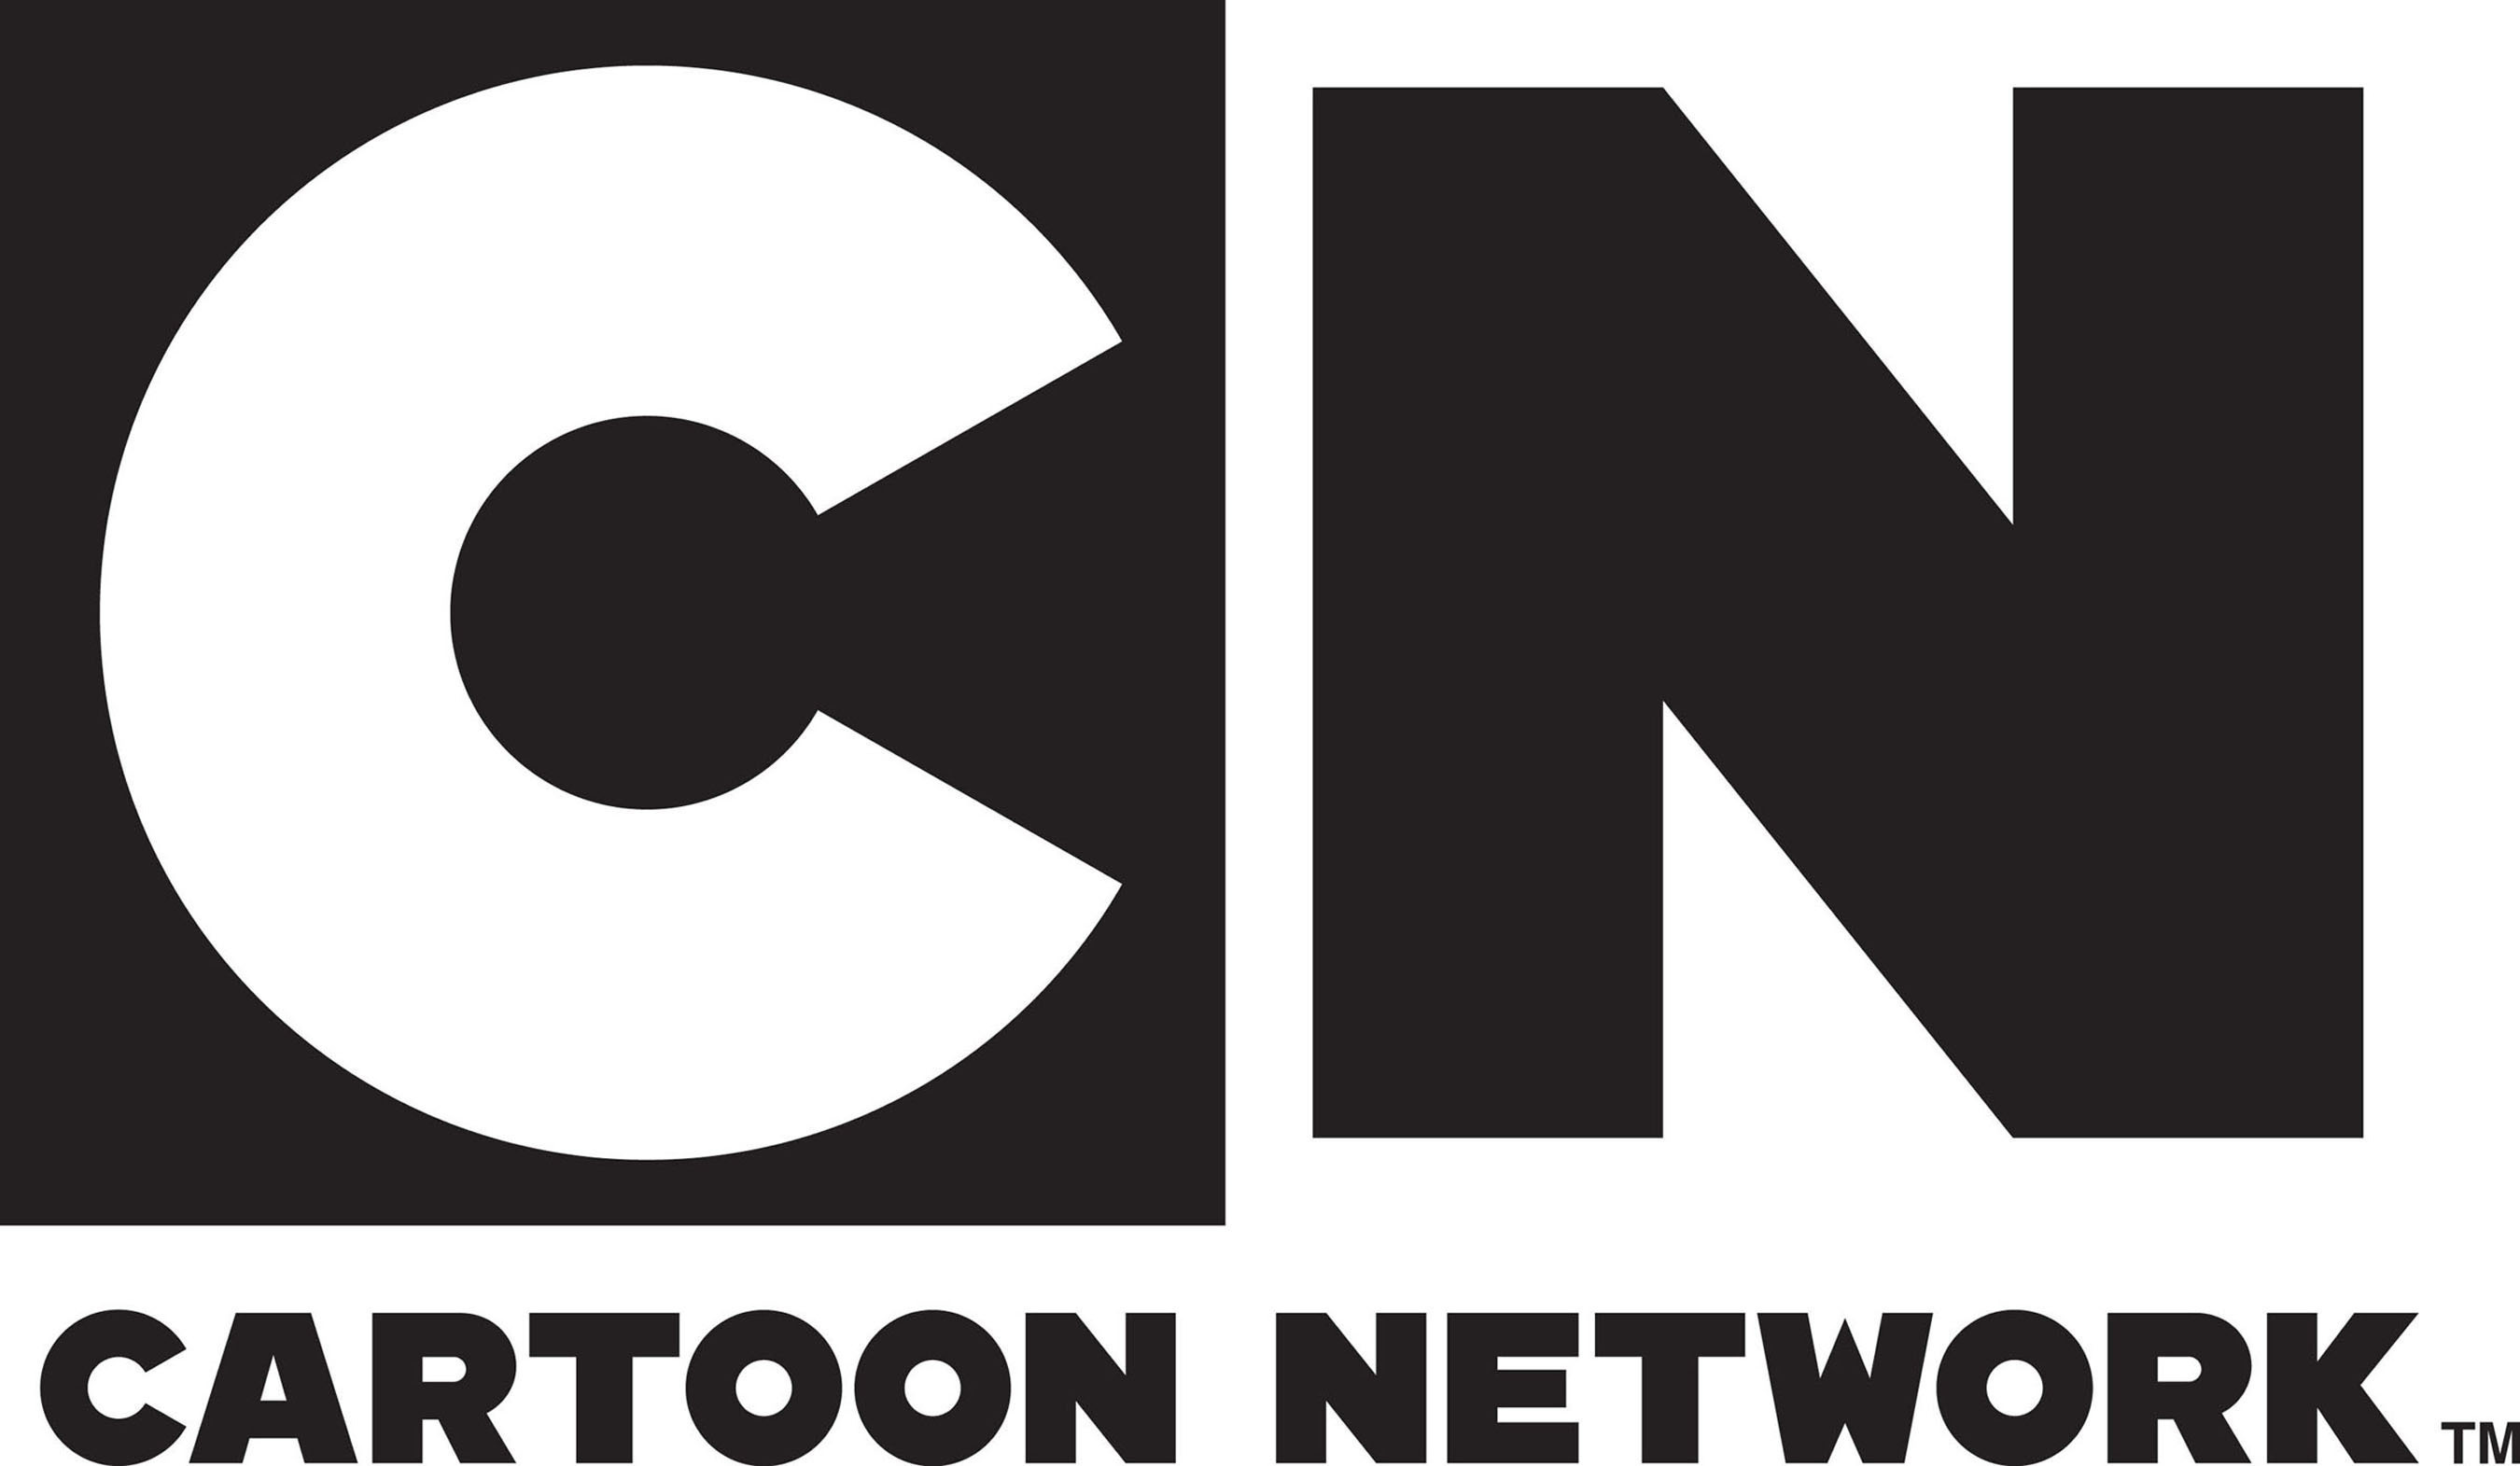 Cartoon Network Logo. (PRNewsFoto/Cartoon Network) (PRNewsFoto/CARTOON NETWORK)